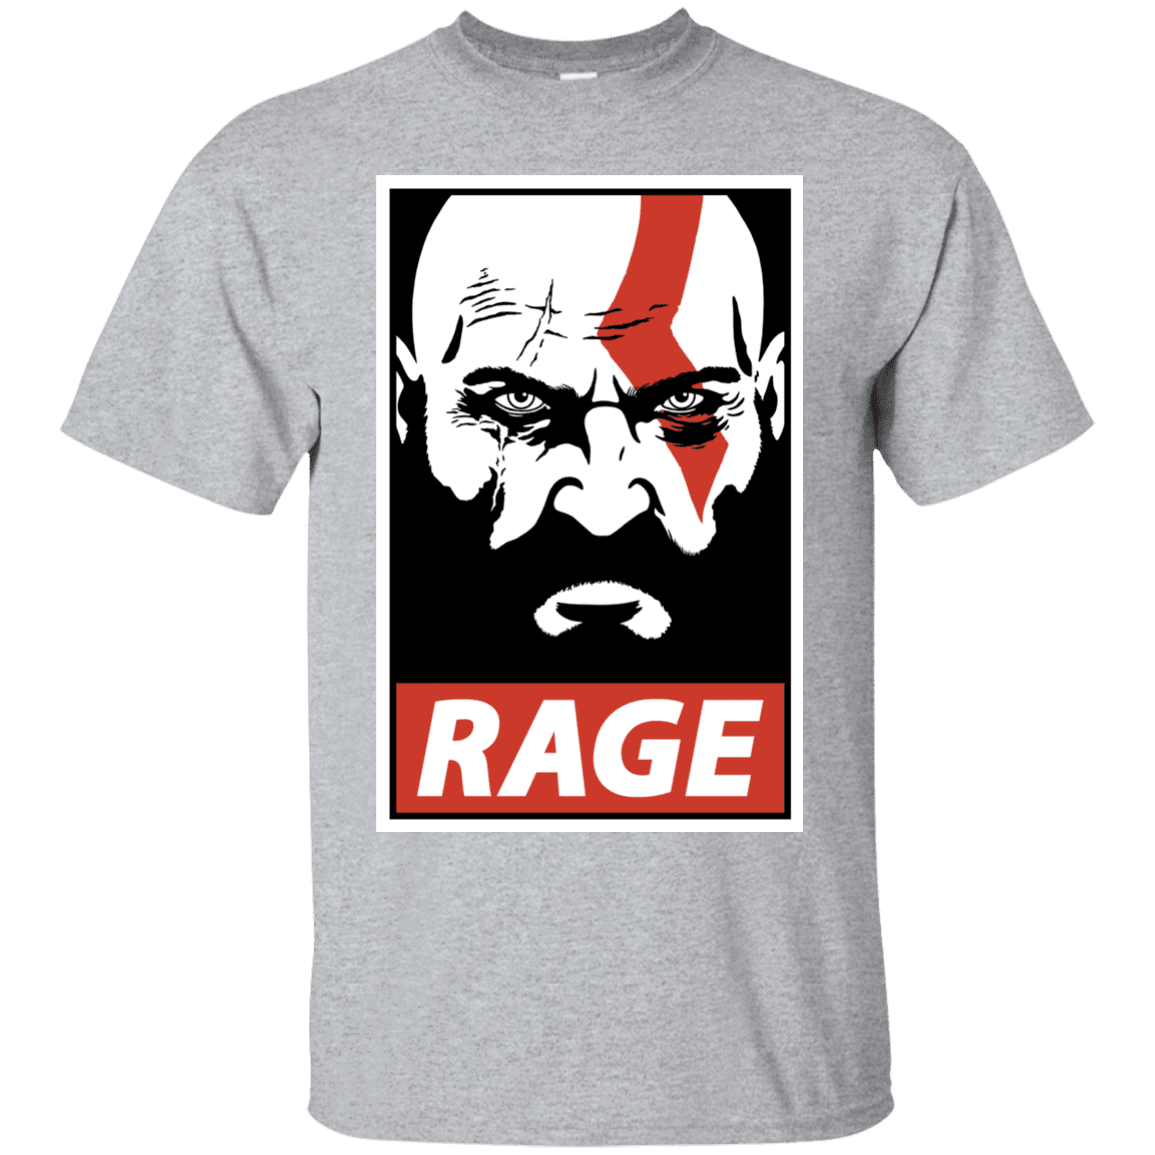 T-Shirts Sport Grey / S Spartan Rage T-Shirt